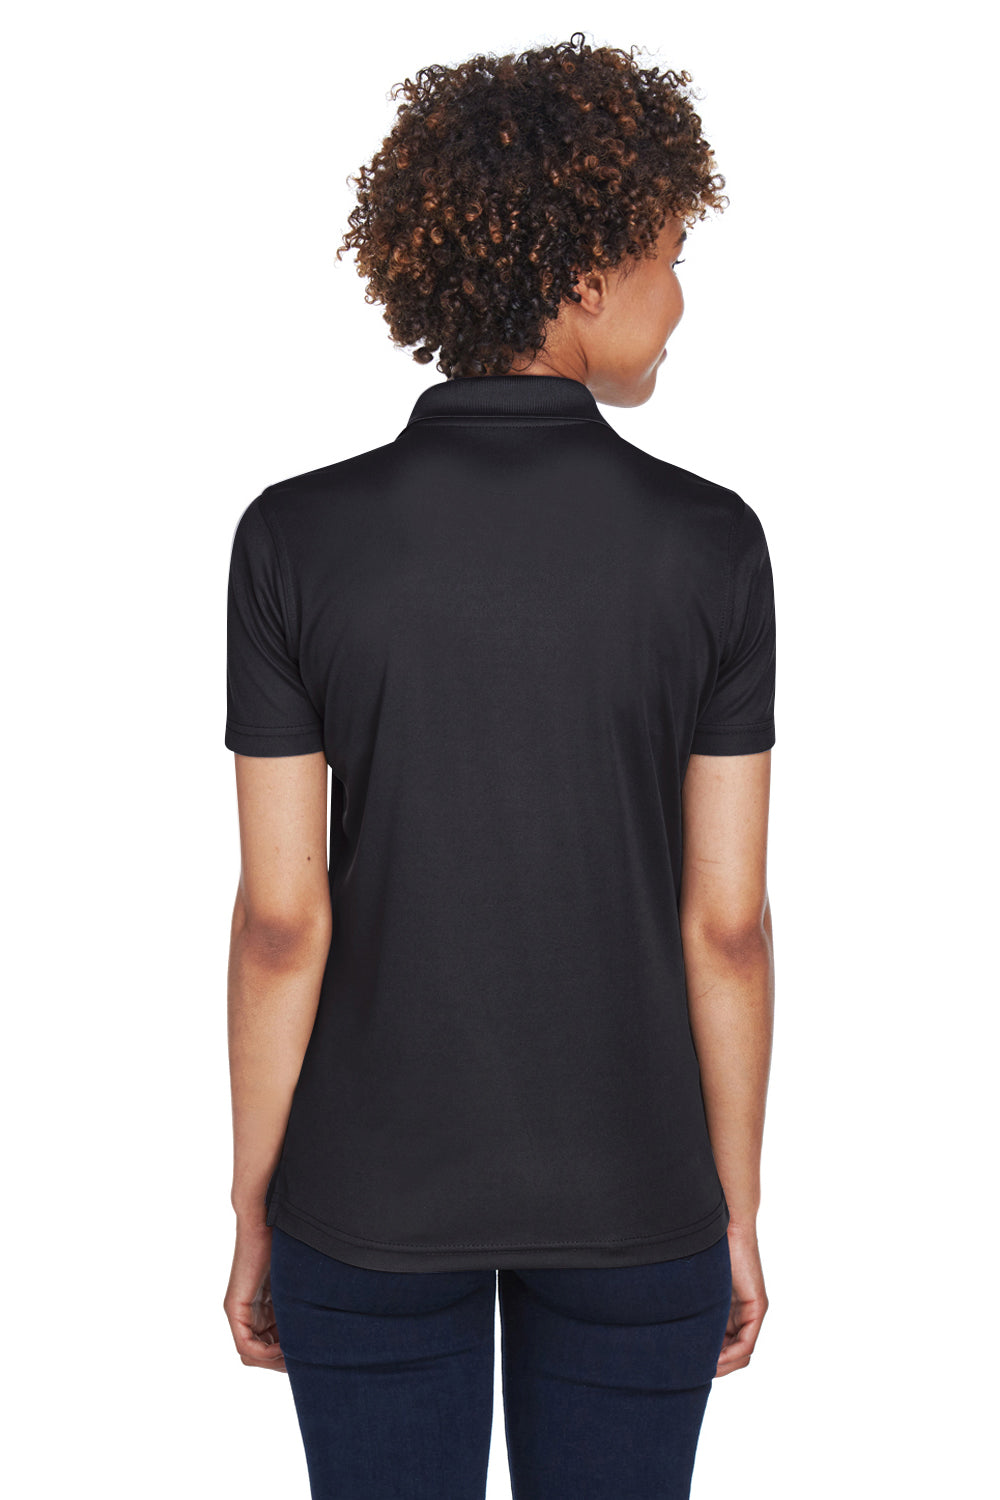 UltraClub 8210L Womens Cool & Dry Moisture Wicking Short Sleeve Polo Shirt Black Back